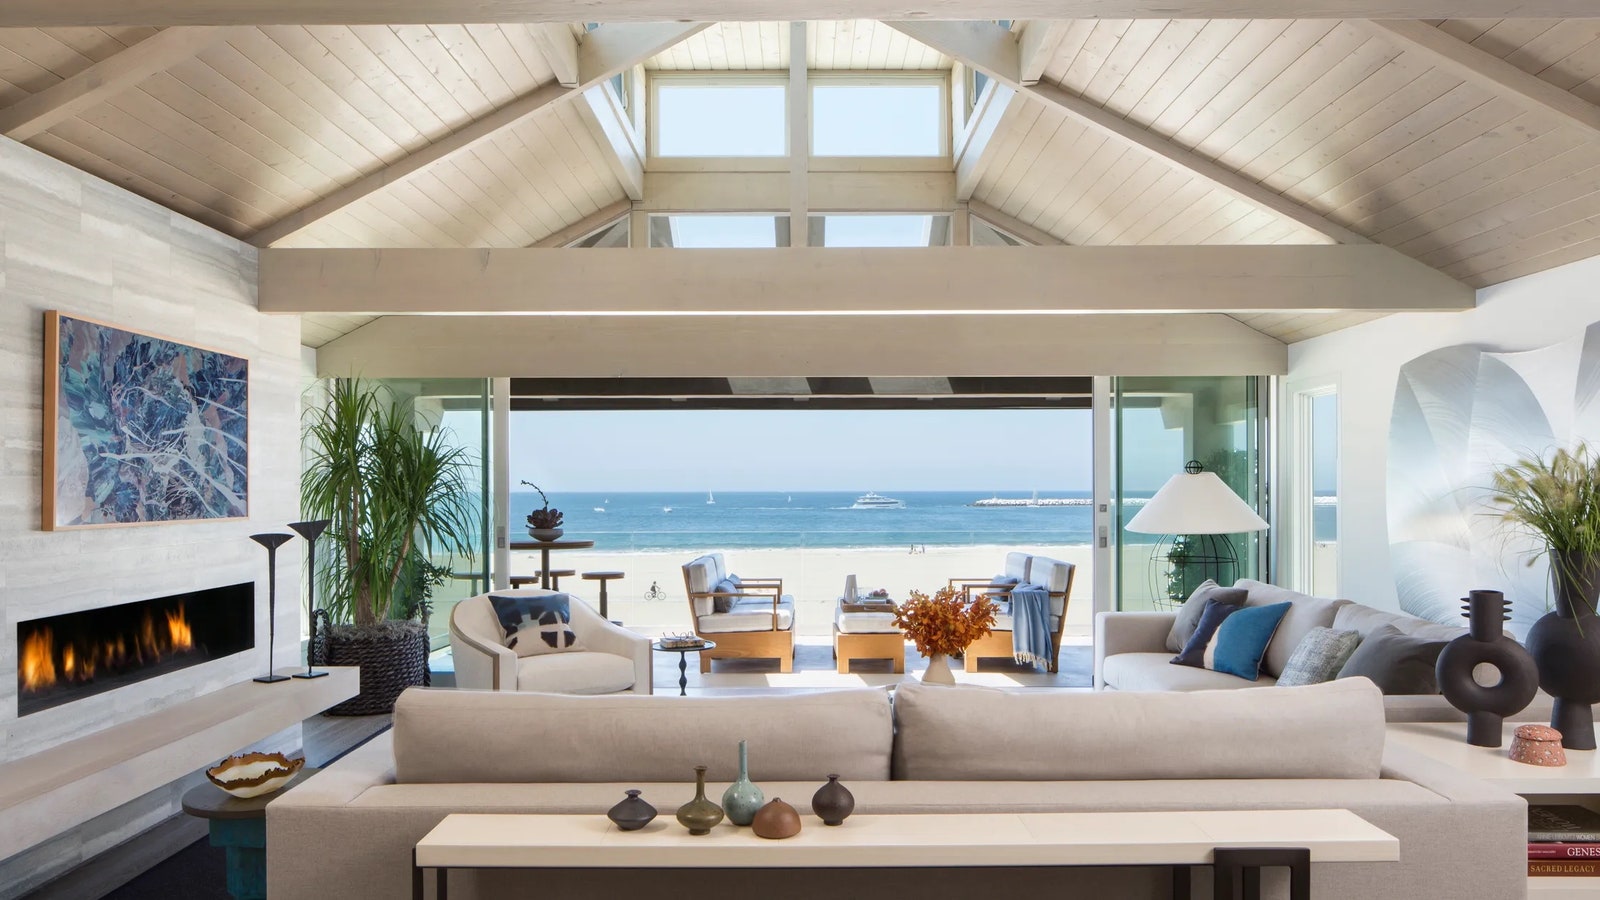 he design of NBA legend Phil Jacksons Playa del Rey home was inspired by ocean and beach views. Patrick Ediger Interior...